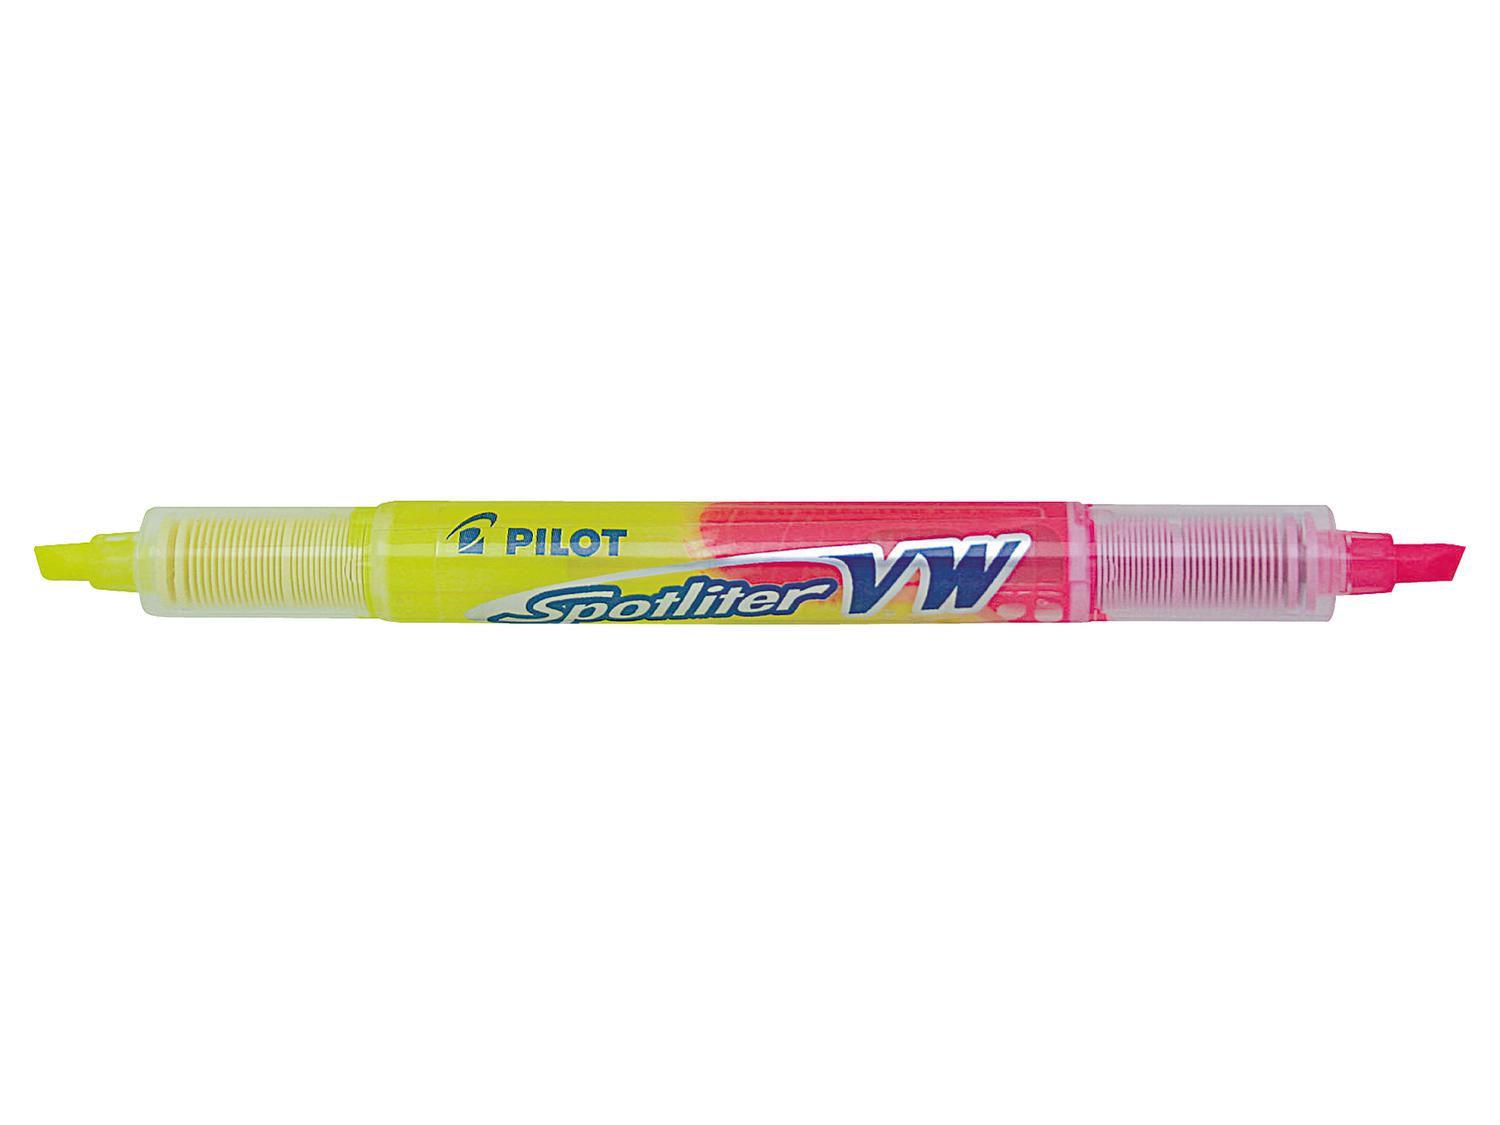 Pilot Begreen Spotliter VW Highlighter Pen Twin Chisel Tip 3.3mm Line Yellow/Pink (Pack 10)